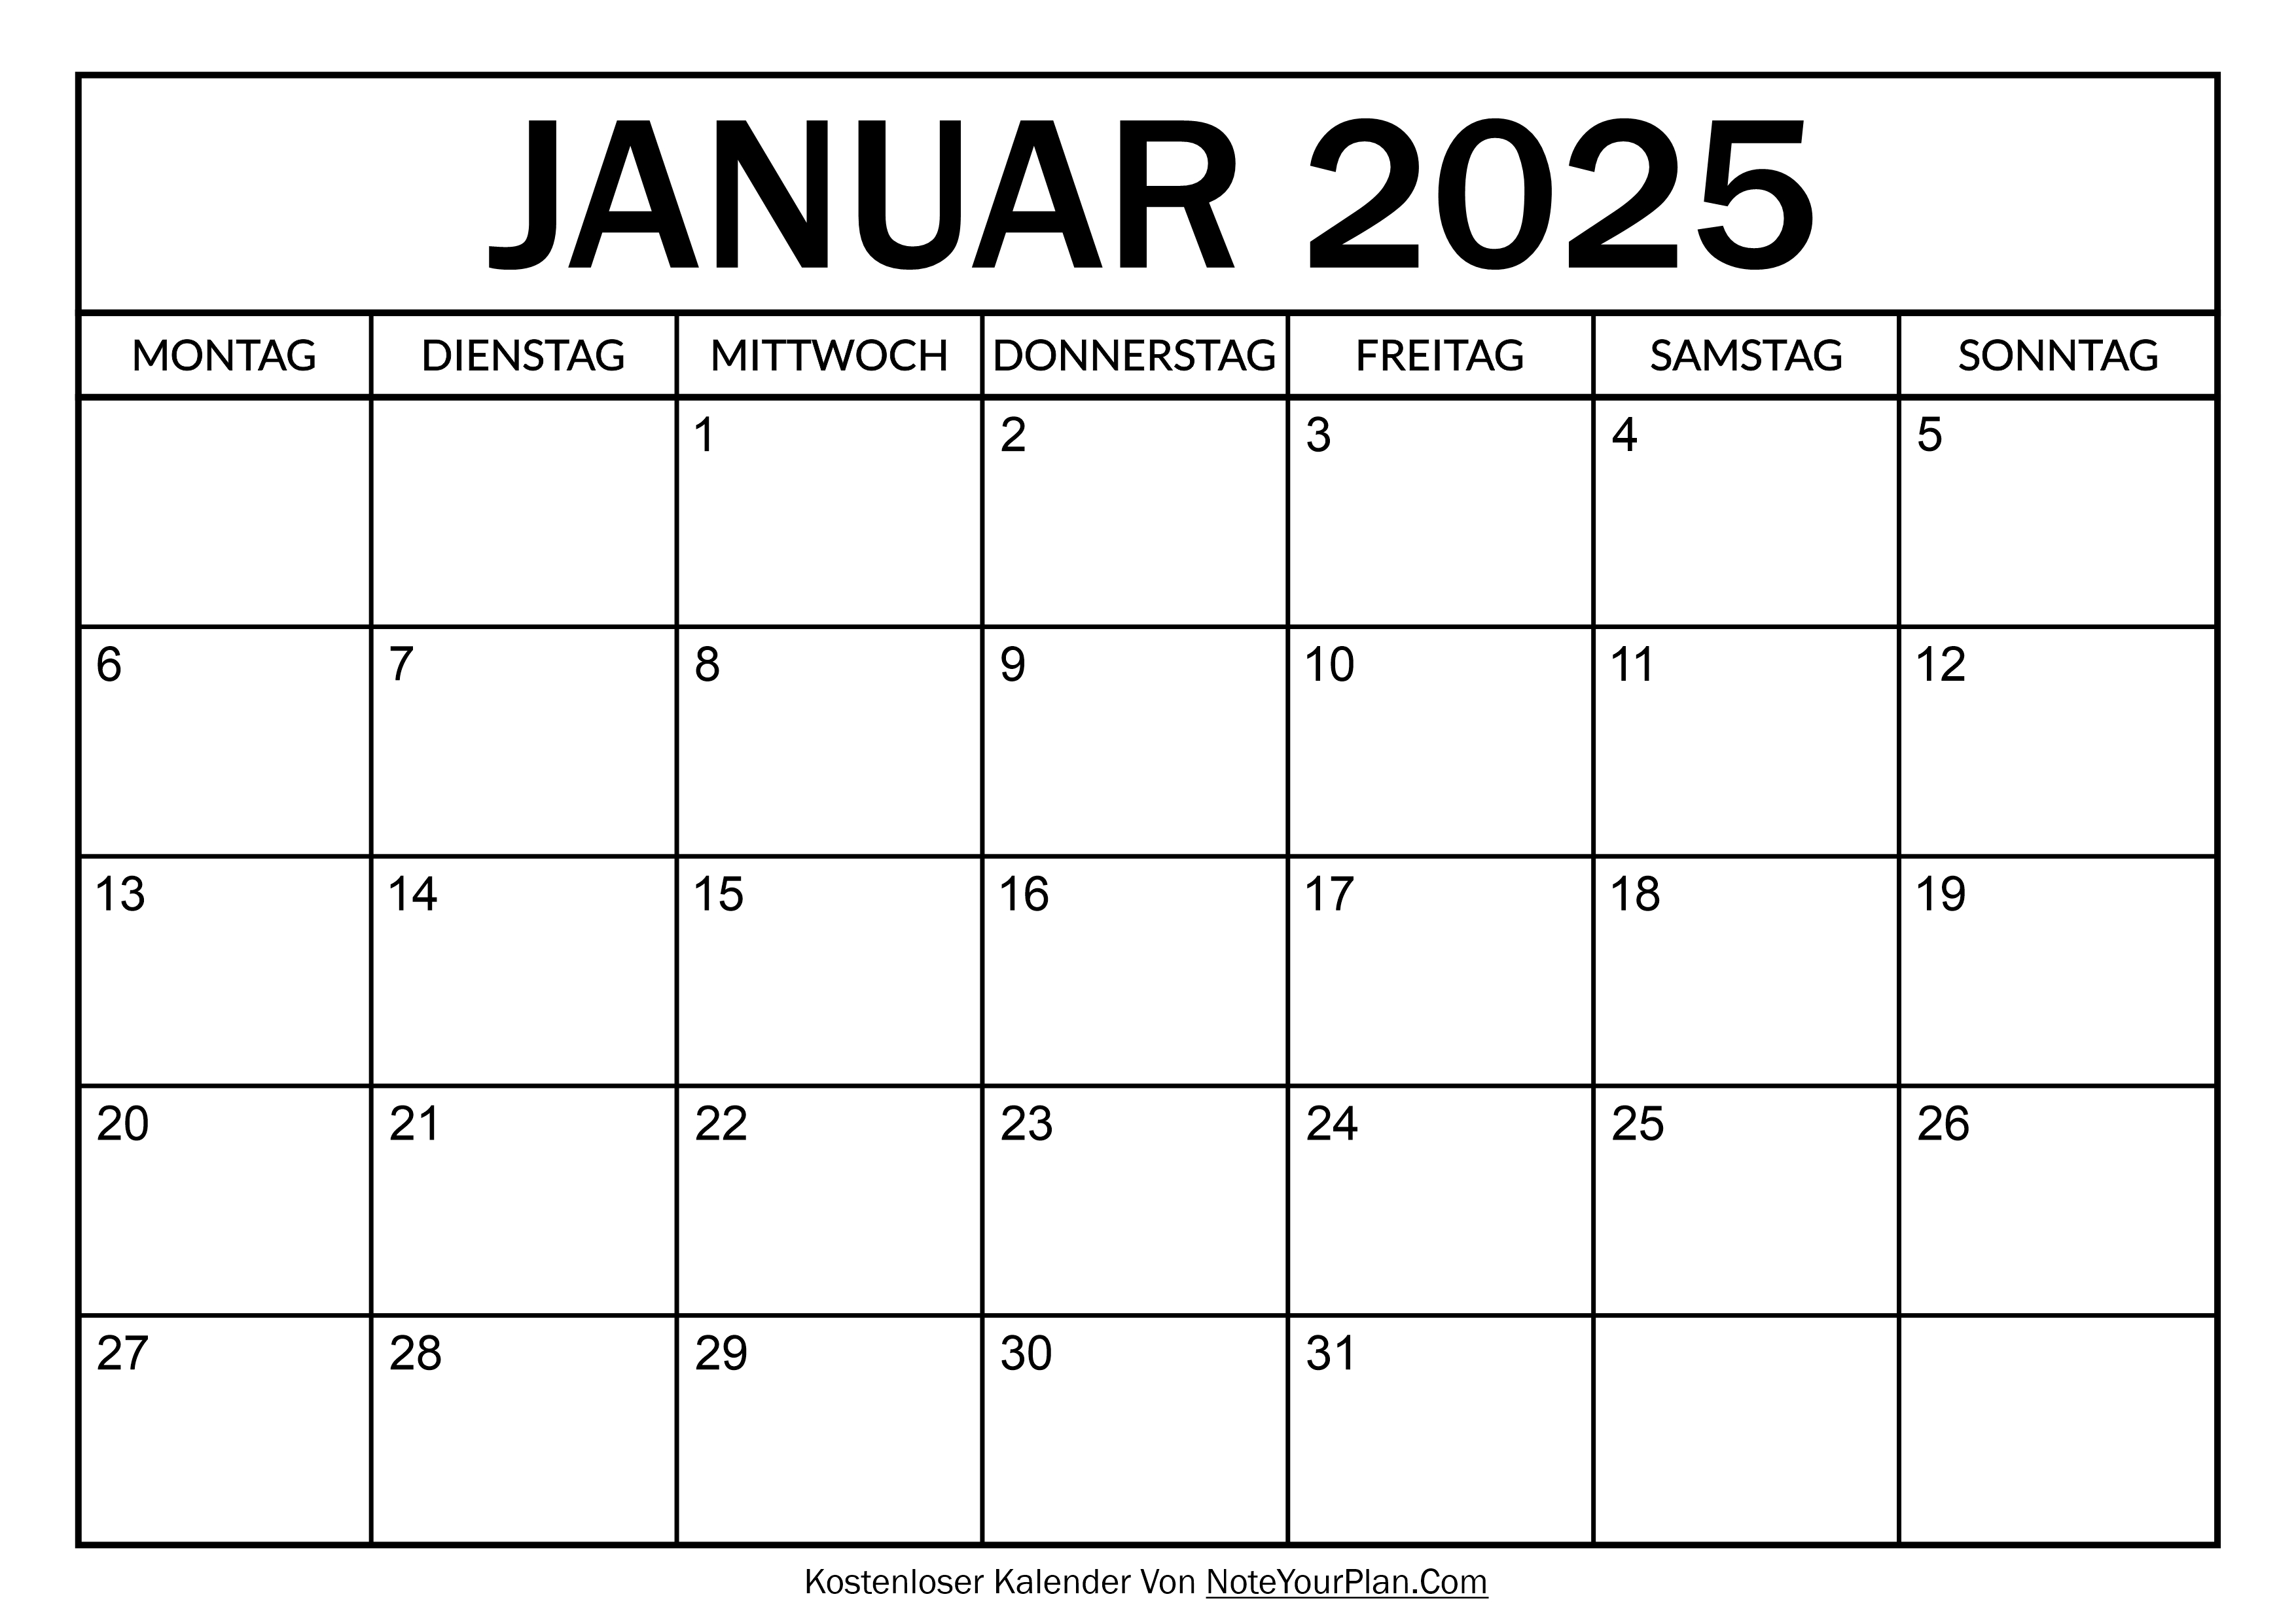 Kalender für Januar 2025